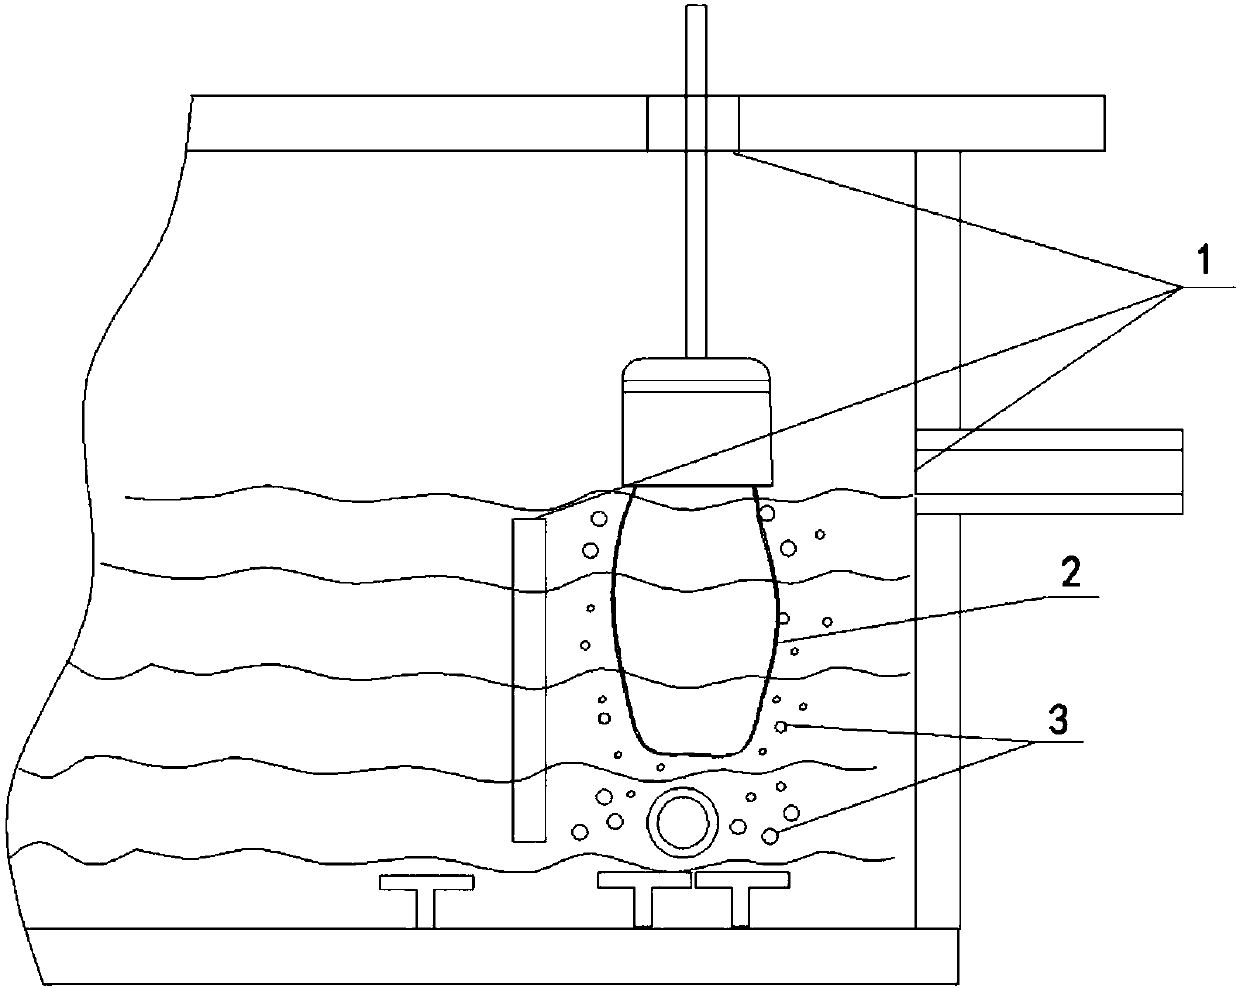 Distributed sewage coupling treatment method